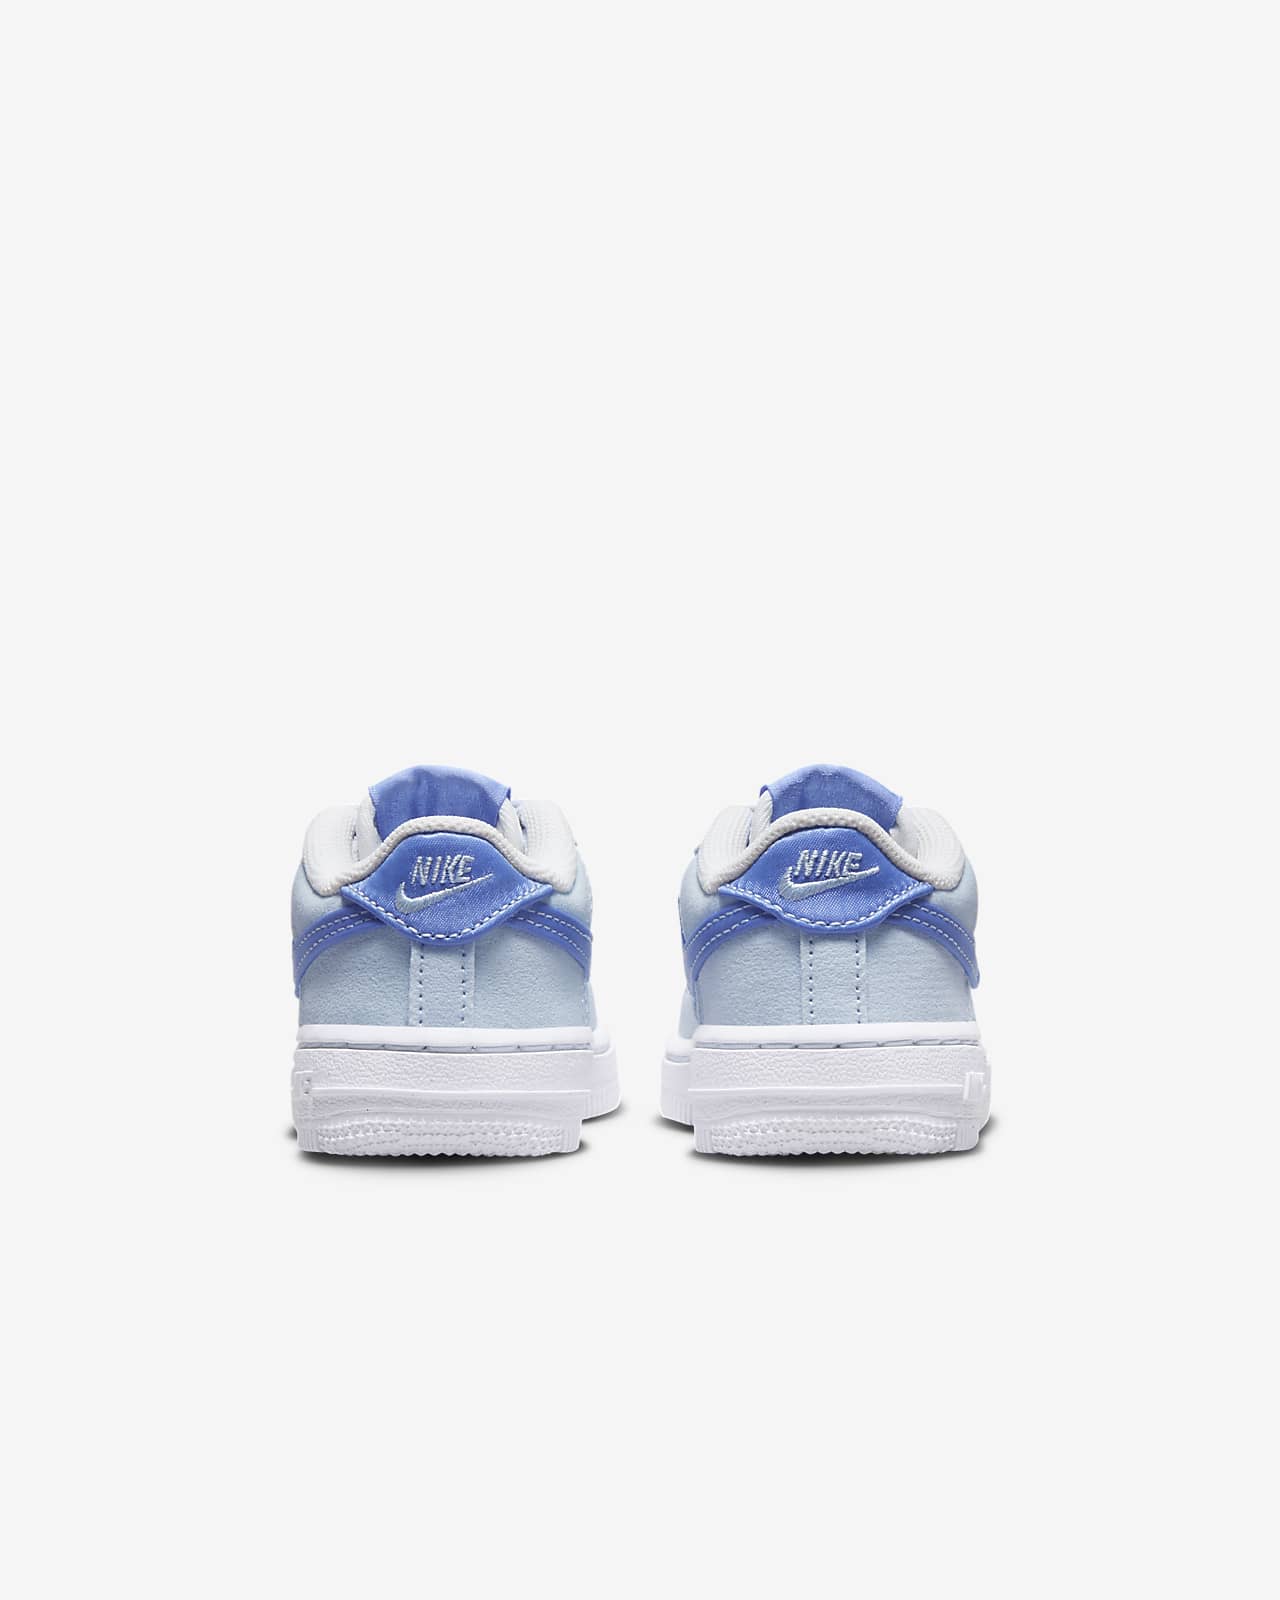 Nike Force 1 LV8 Utility Infant/Toddler Shoes.